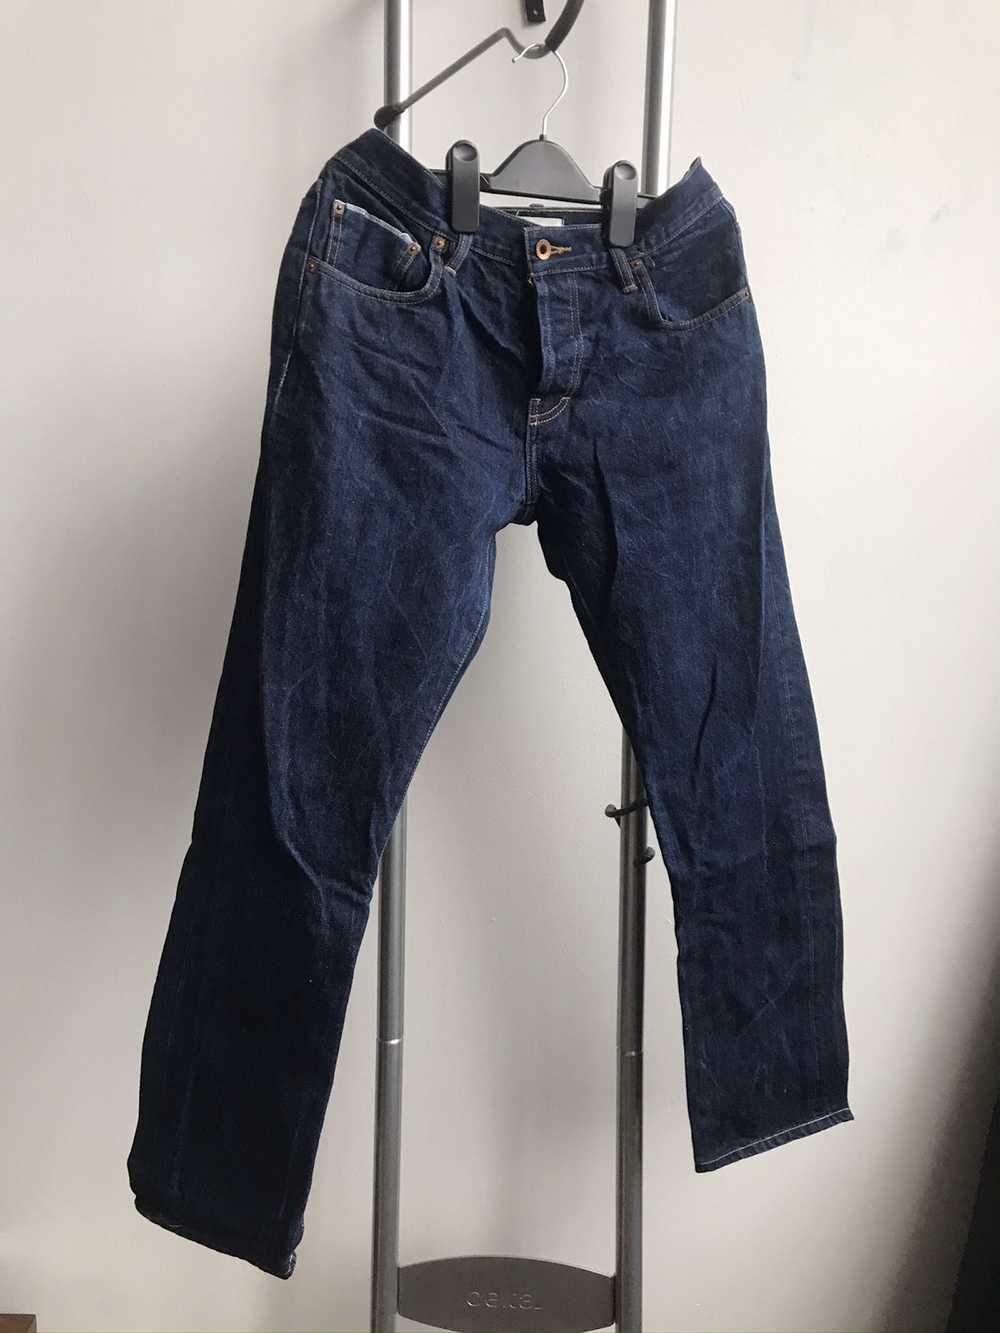 Taylor Stitch Selvedge Denim Jeans 30x32 - image 2